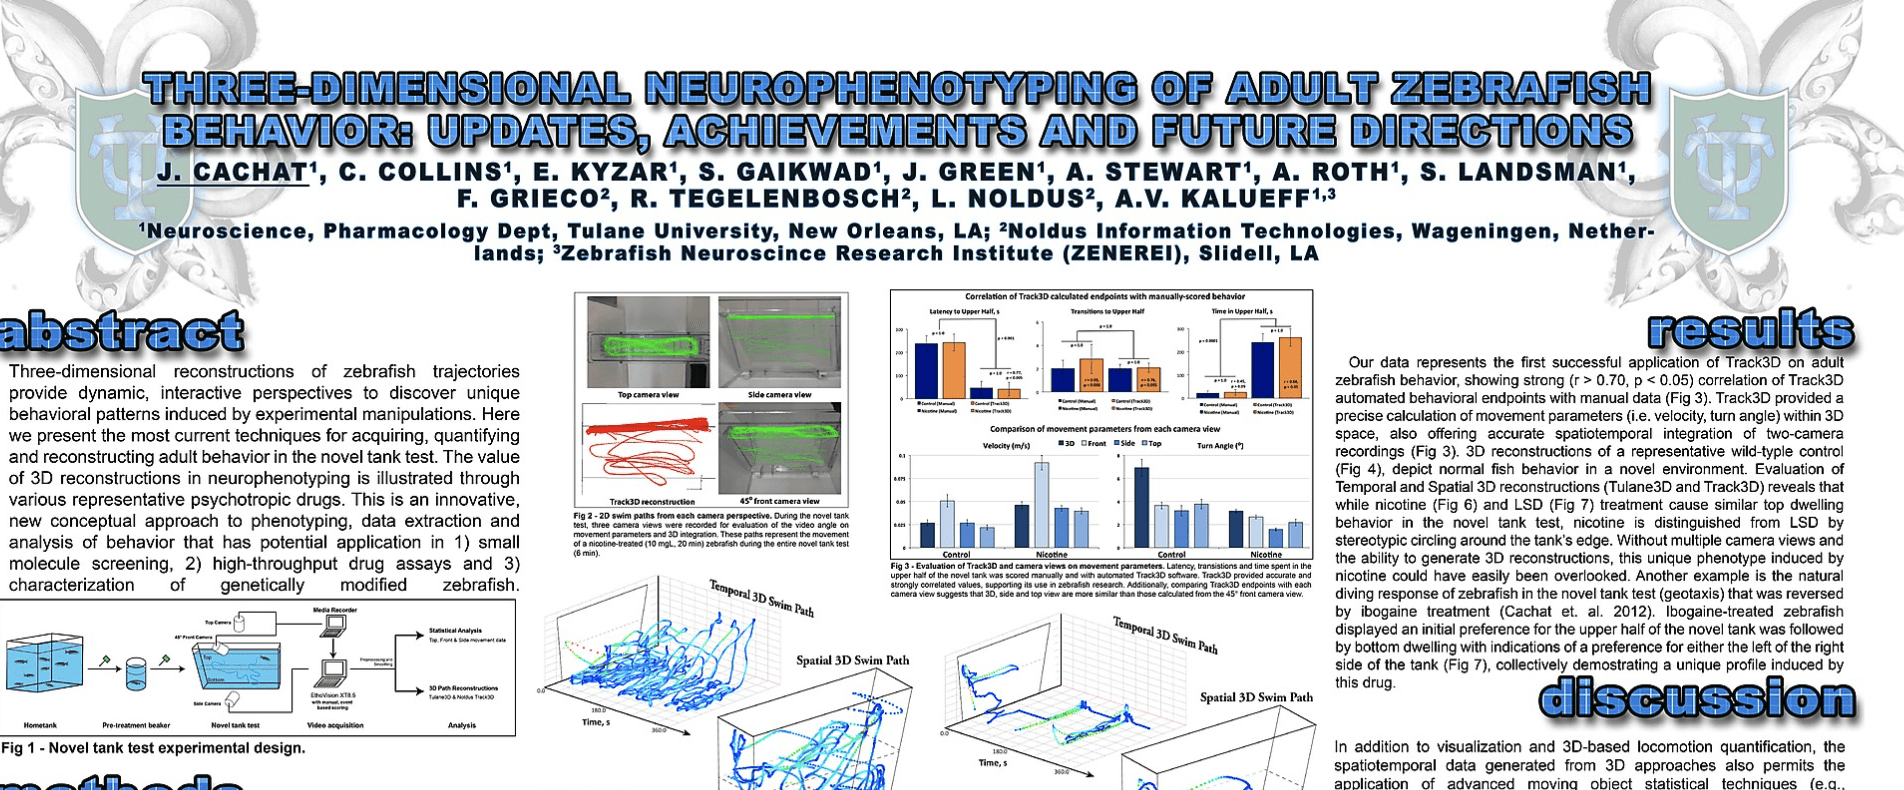 Three-dimensional neurophenotyping of adult zebrafish behavior: updates, achievements and future directions